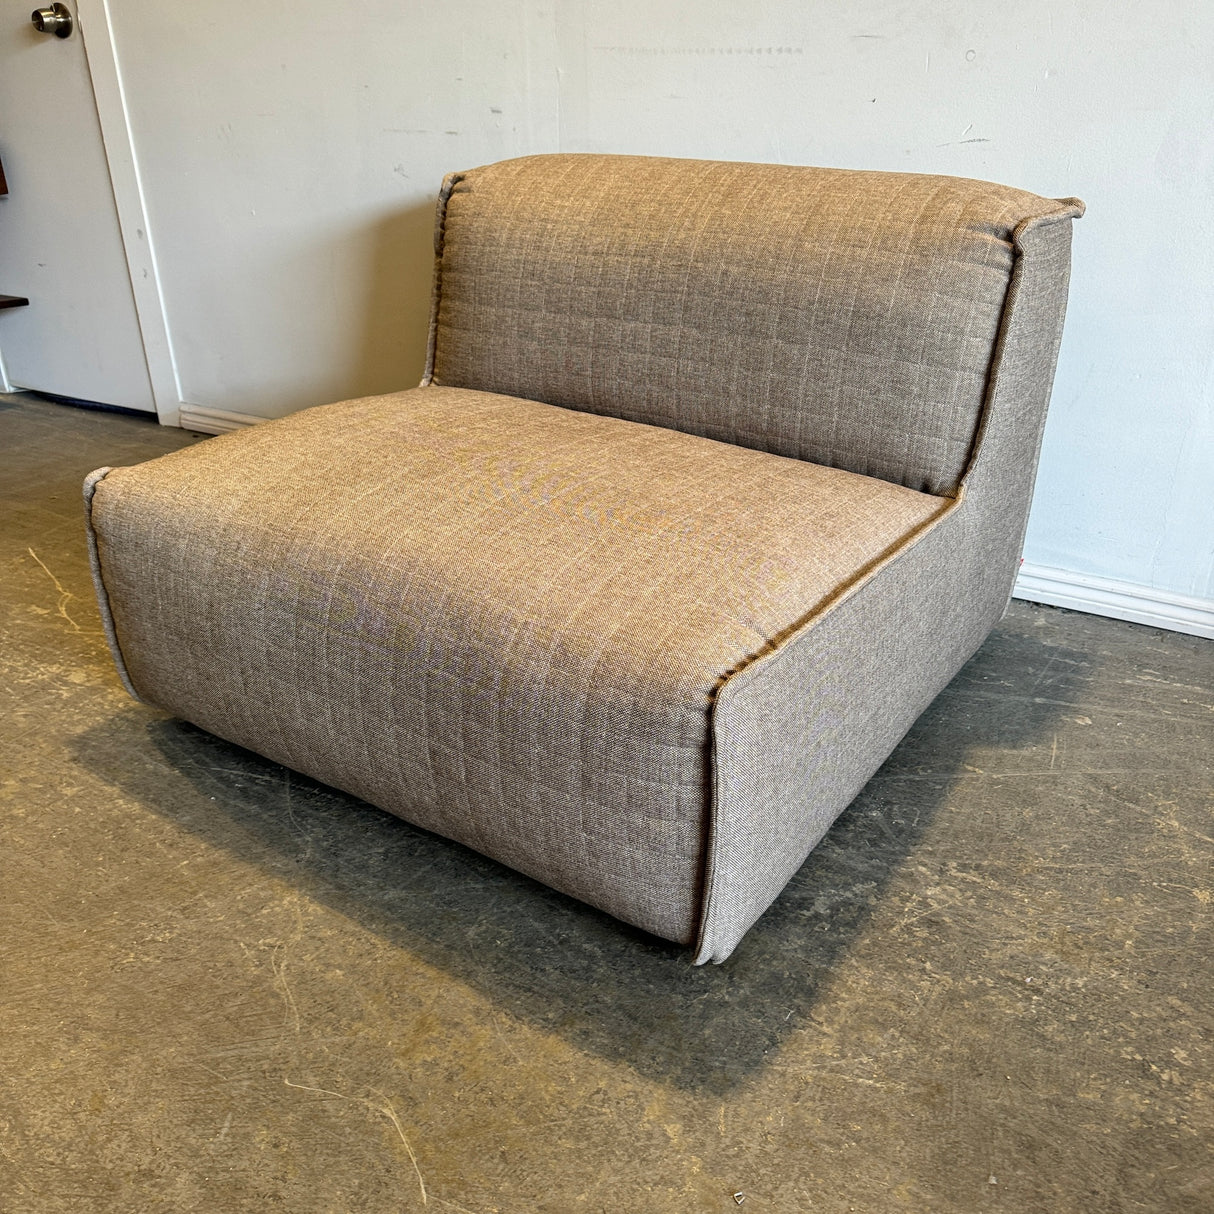 Brand New! Gus Modern 4 piece modular sectional Sofa